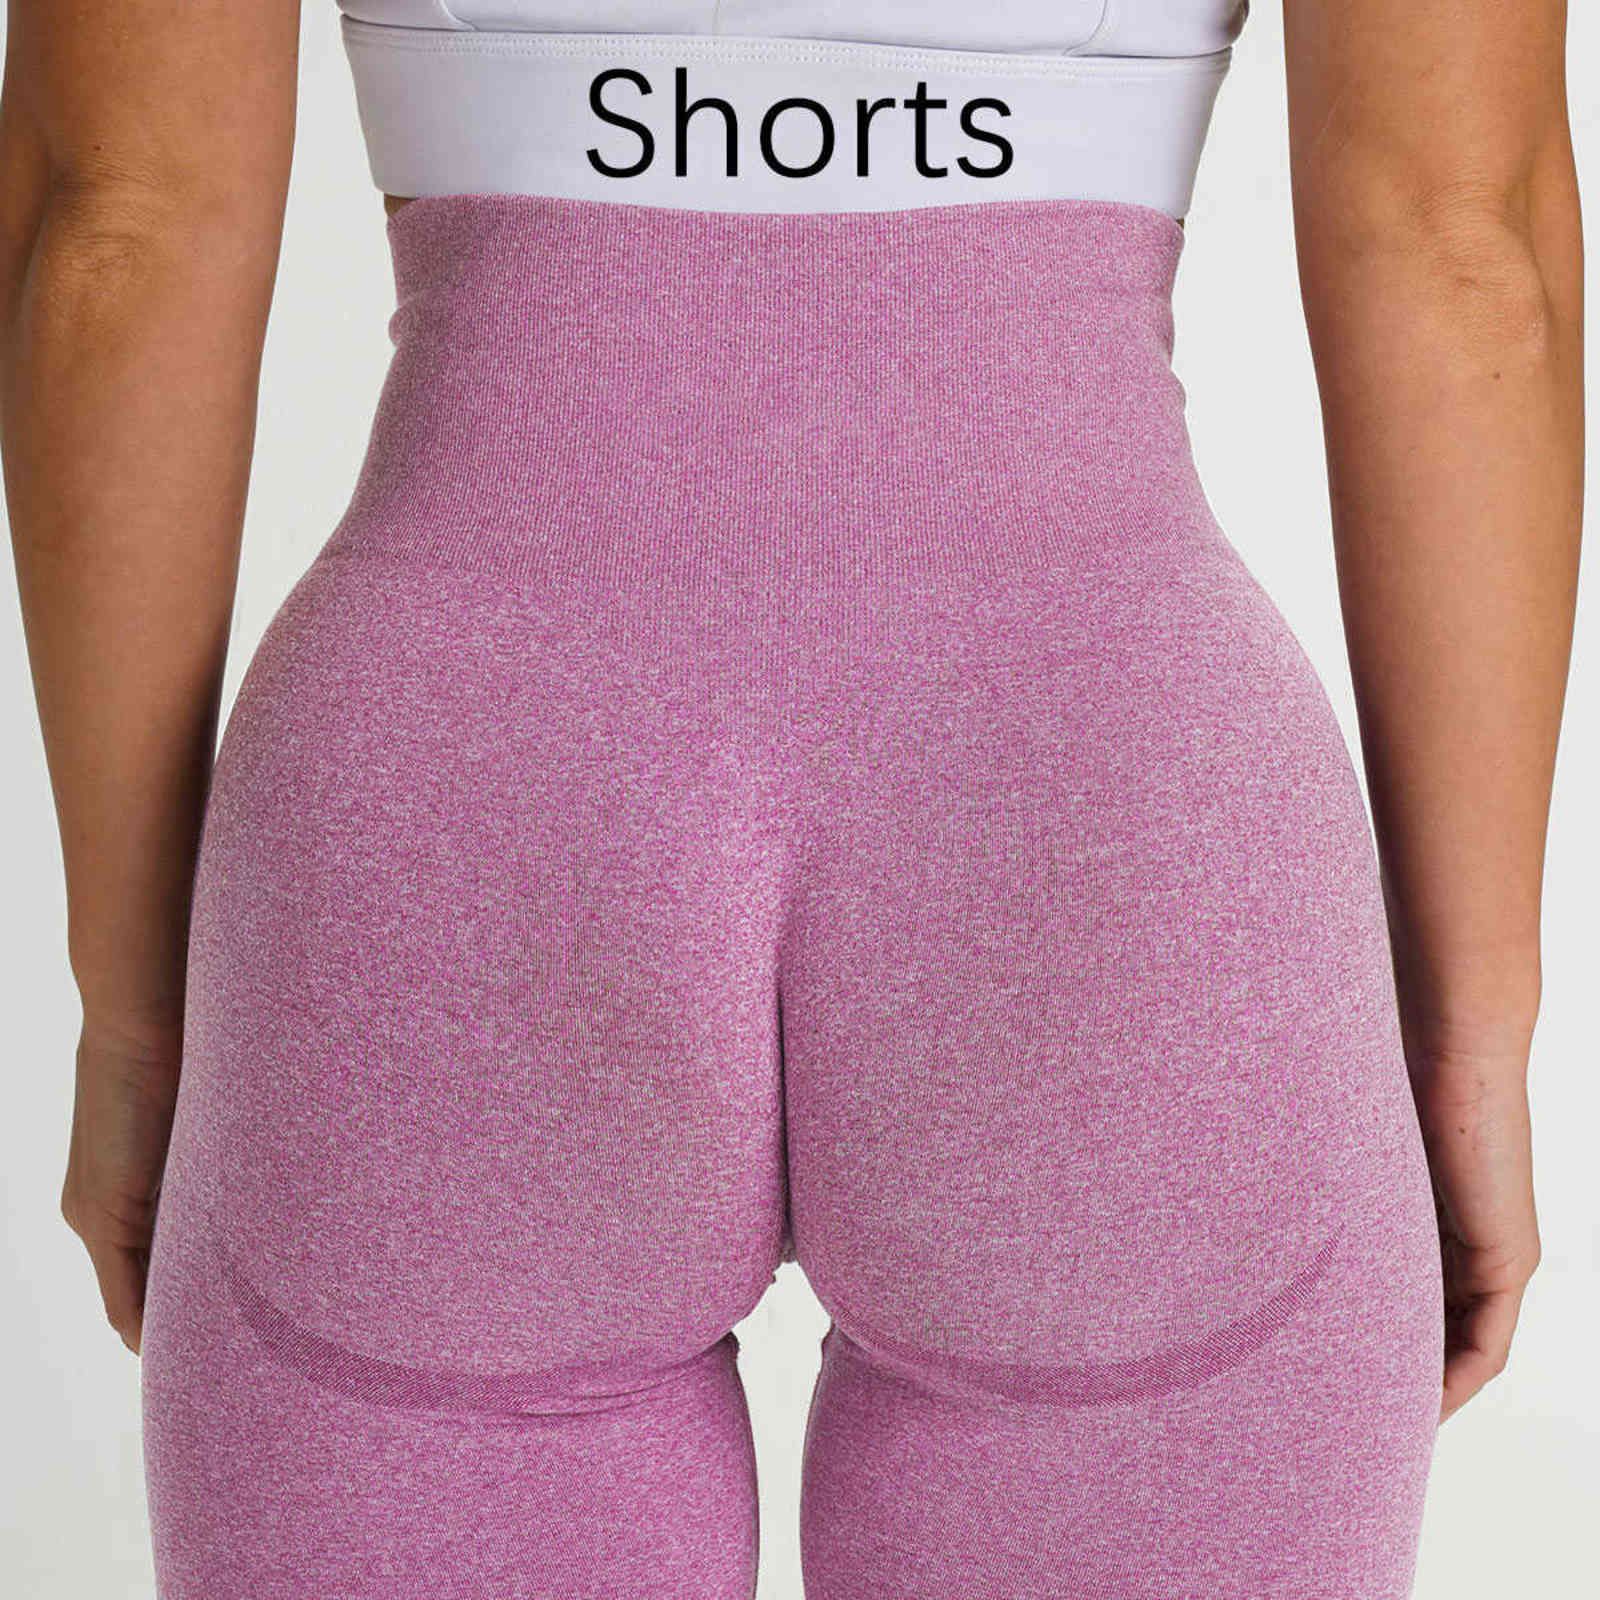 Shorts rpink.